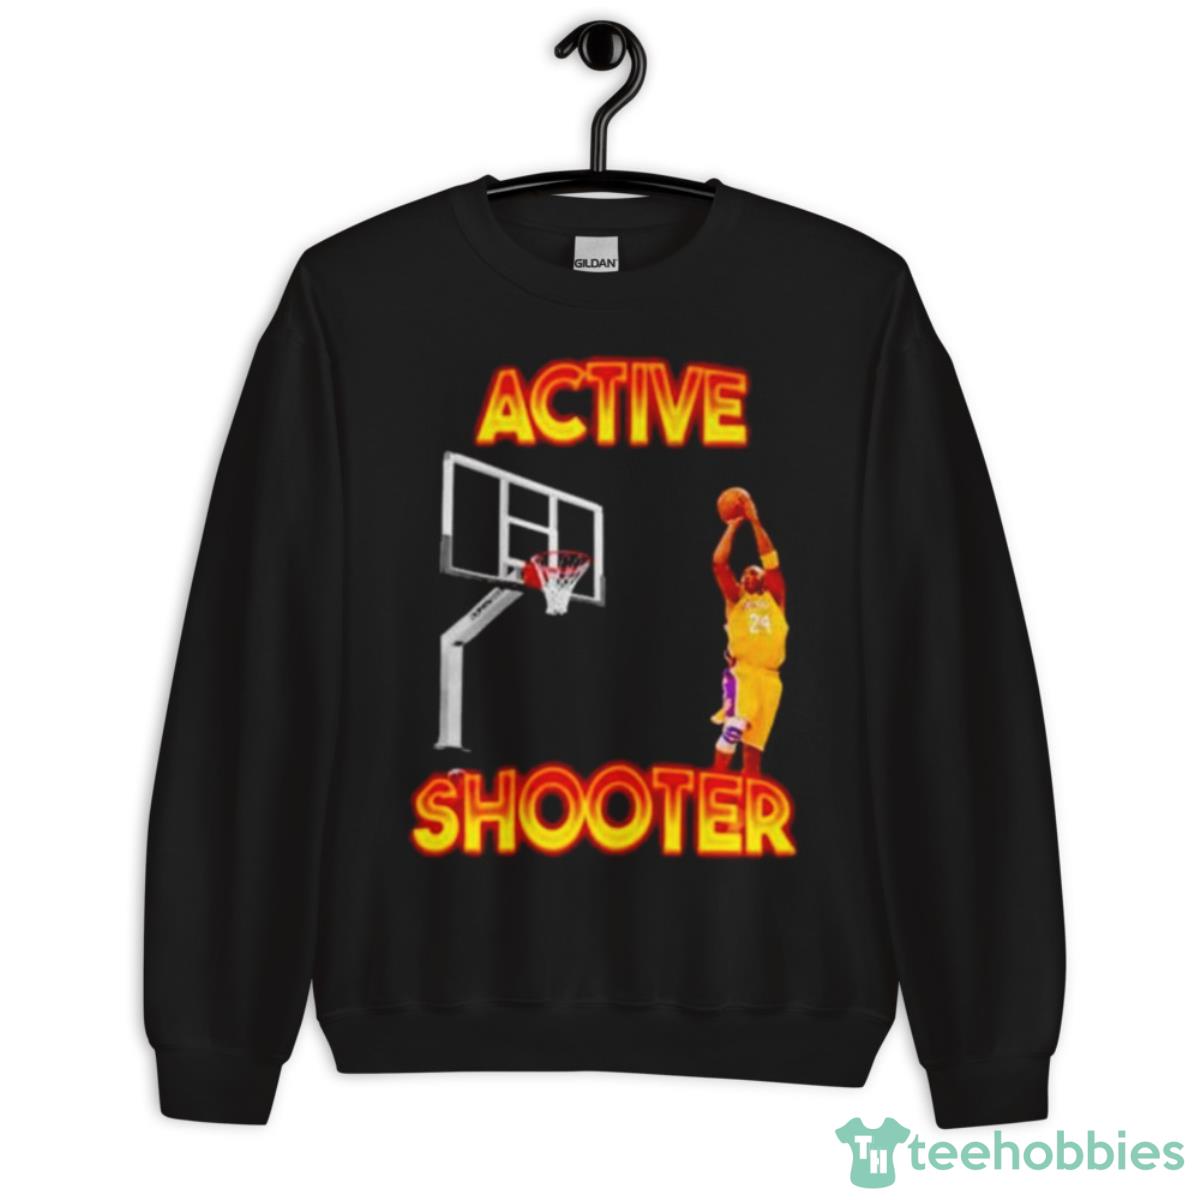 Active Shooter Lakers Legend Basketball Shirt - Unisex Crewneck Sweatshirt